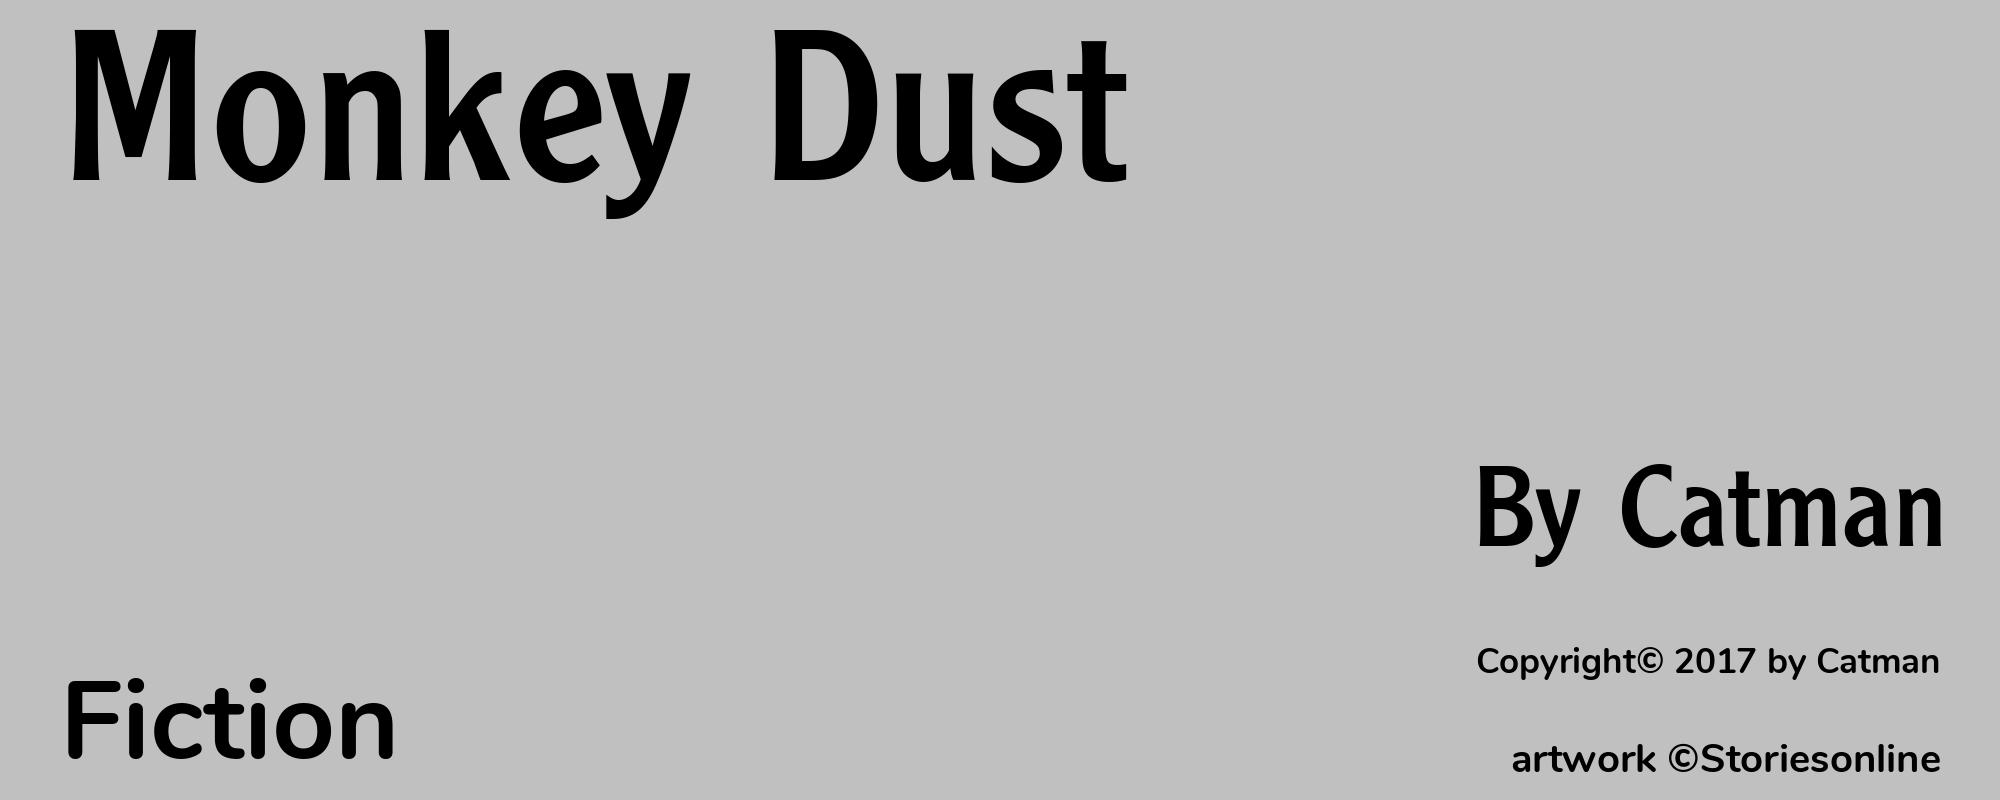 Monkey Dust - Cover